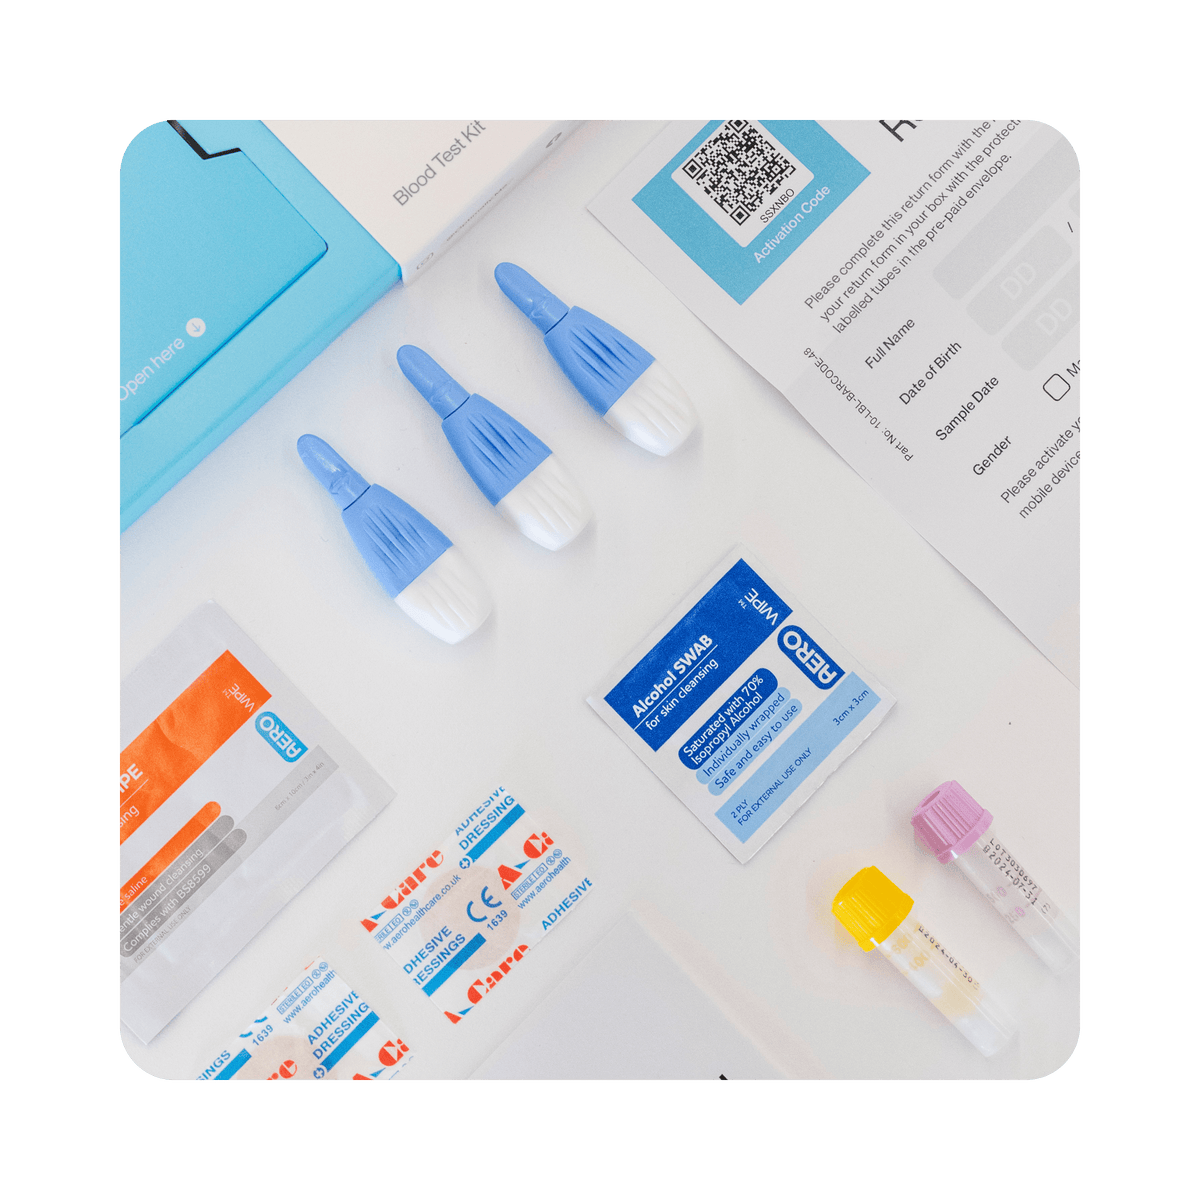 Polycystic Ovary Syndrome (PCOS) Test &amp; Health Platform Test Kit OptimallyMe 